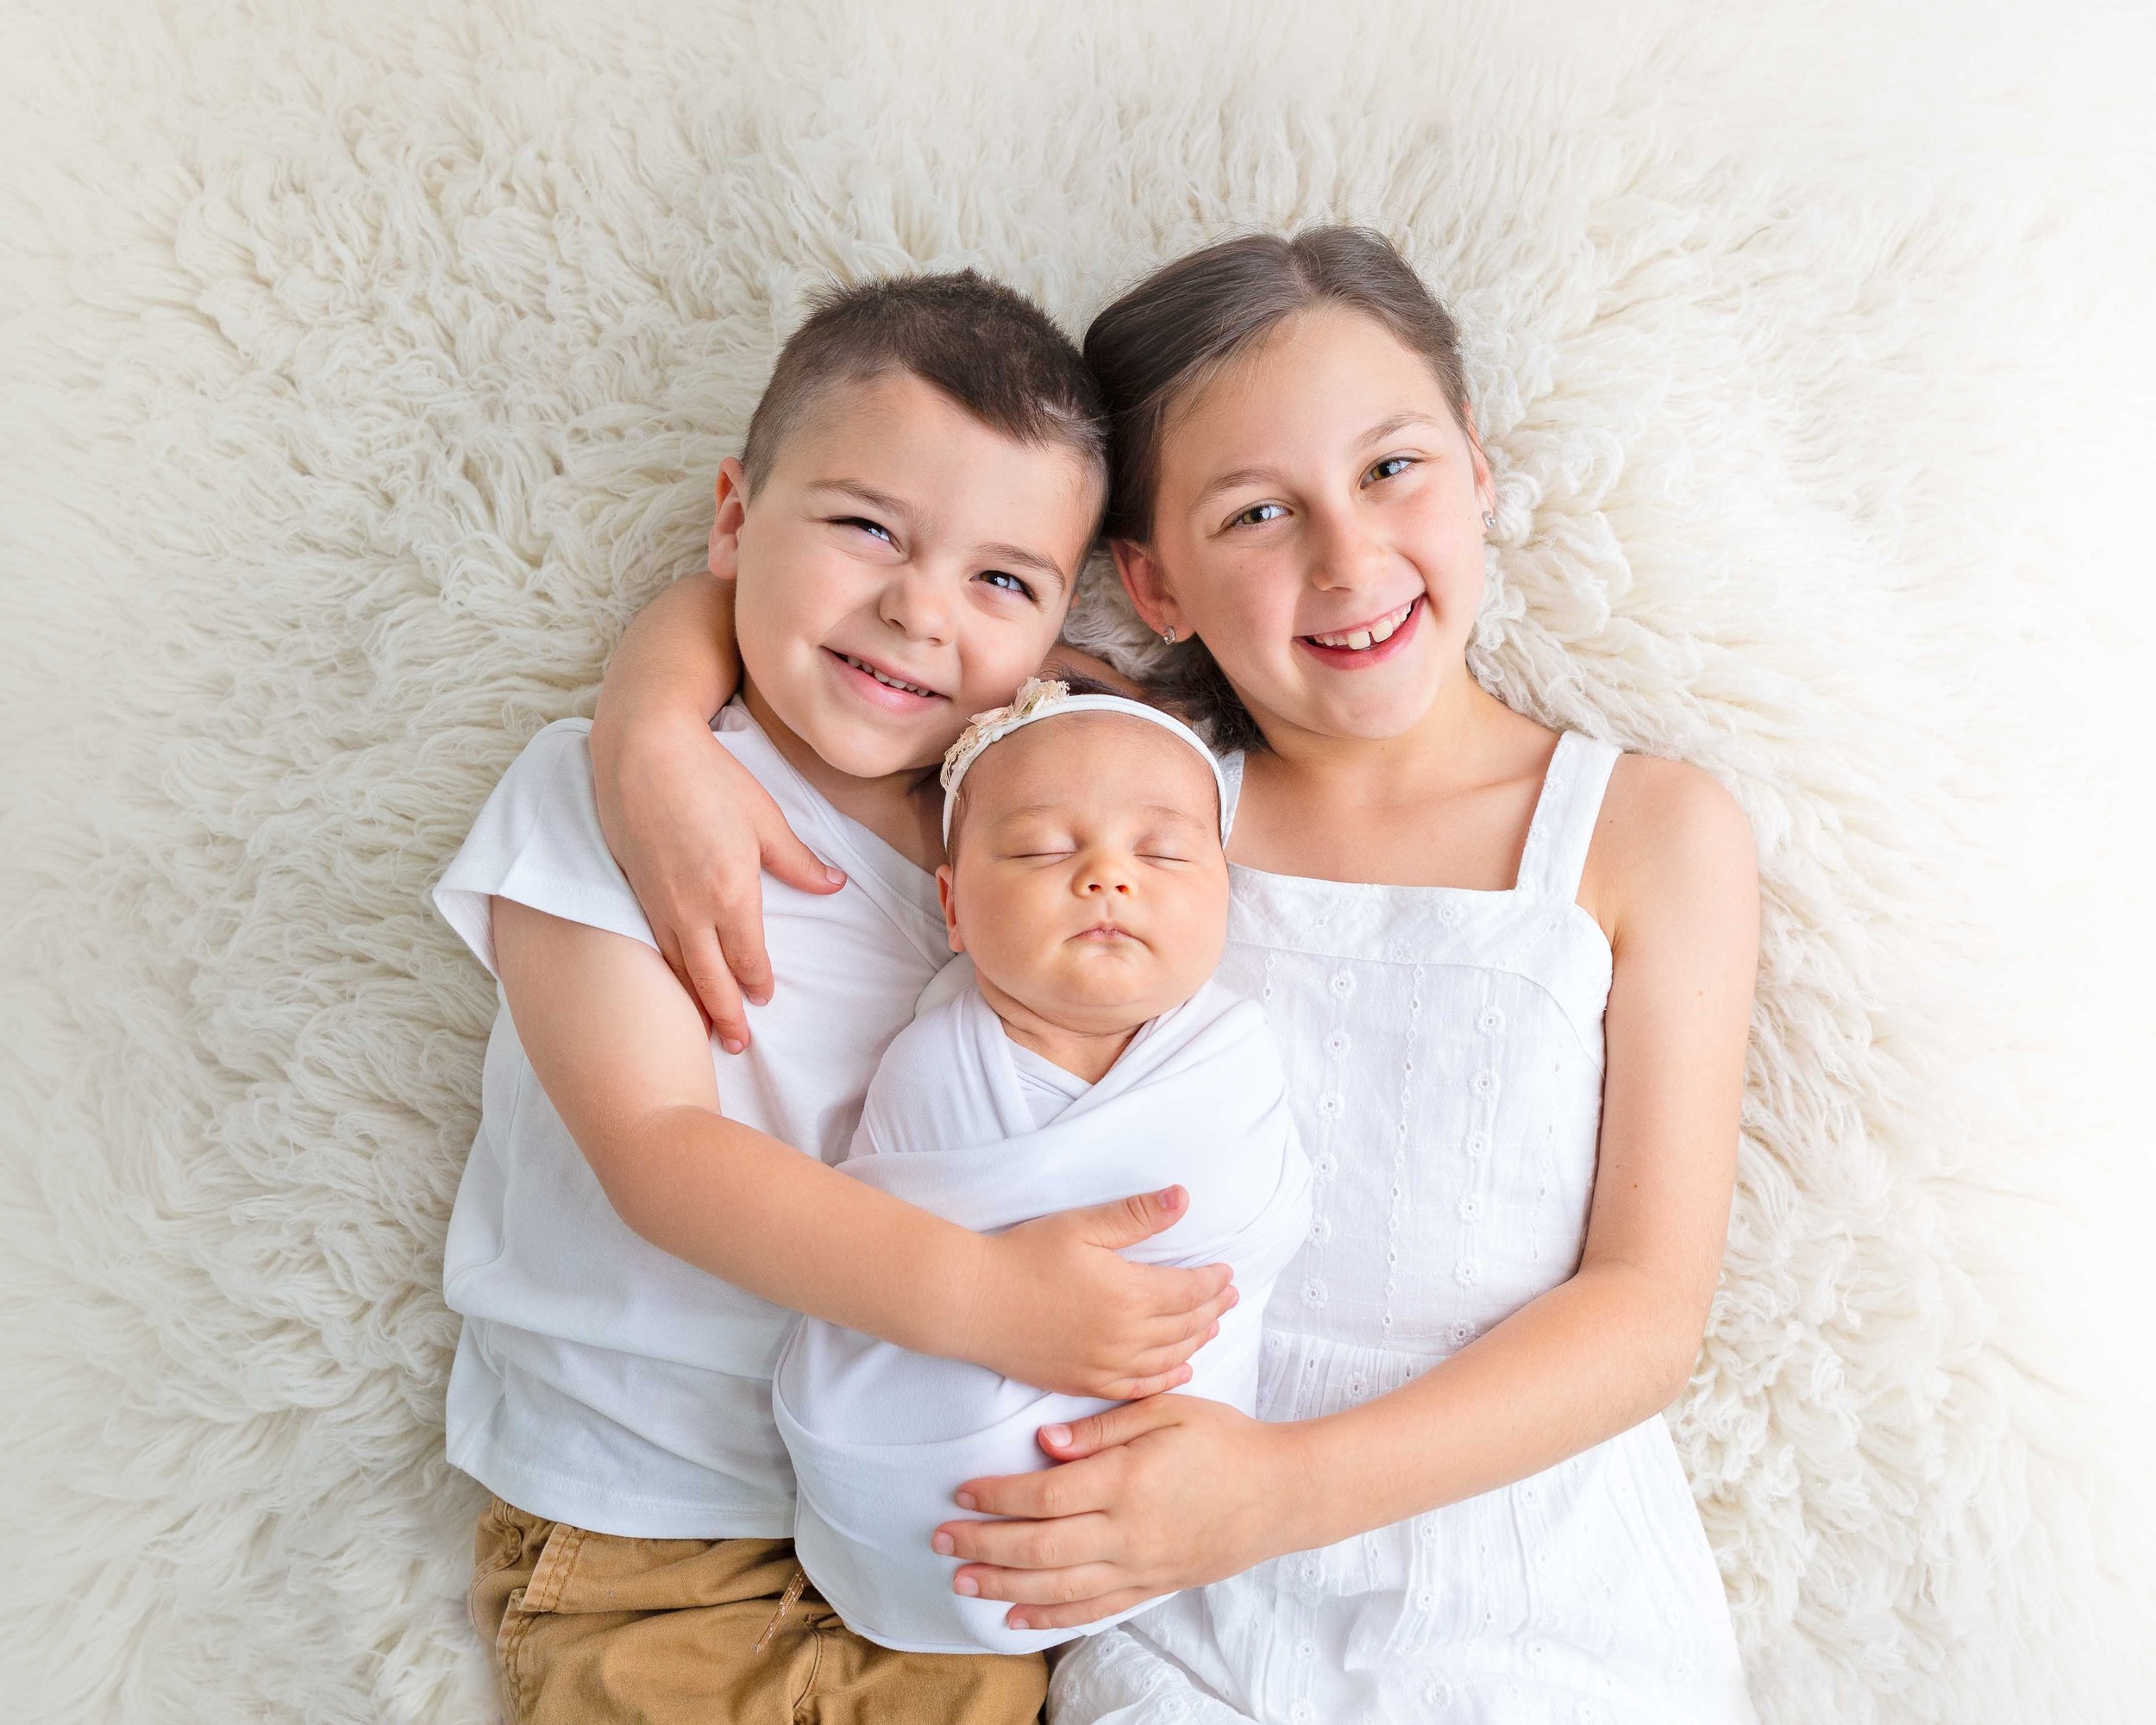 Newborn-baby-girl-photography-big-sister-big-brother-infant-images-spokane-washington-2.jpg